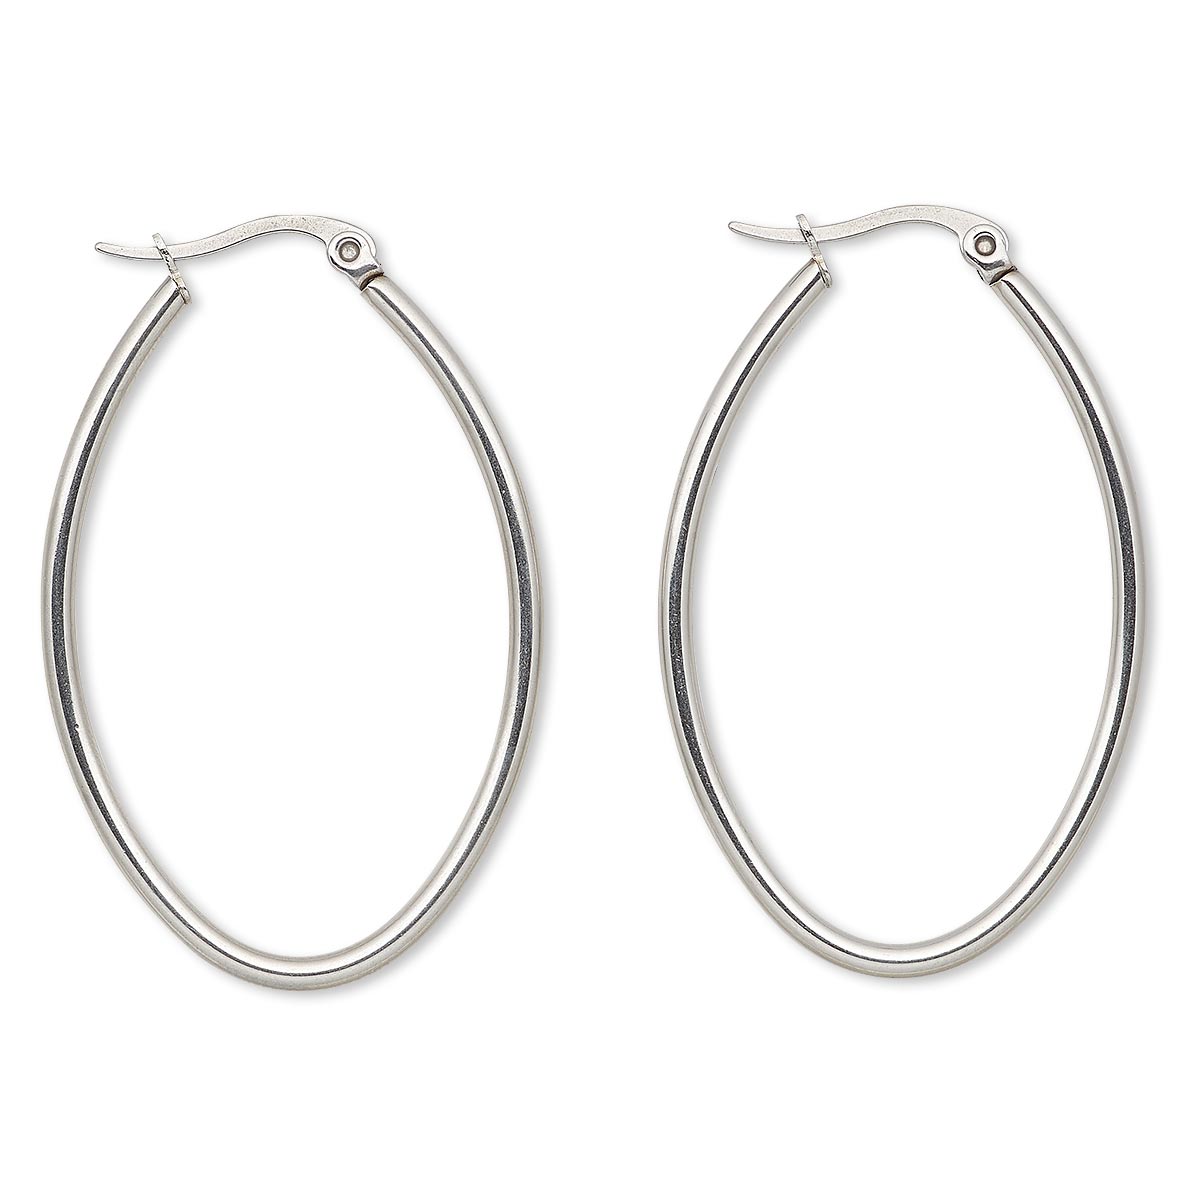 Earring, stainless steel, 44x28mm oval hoop. Sold per pair. - Fire ...